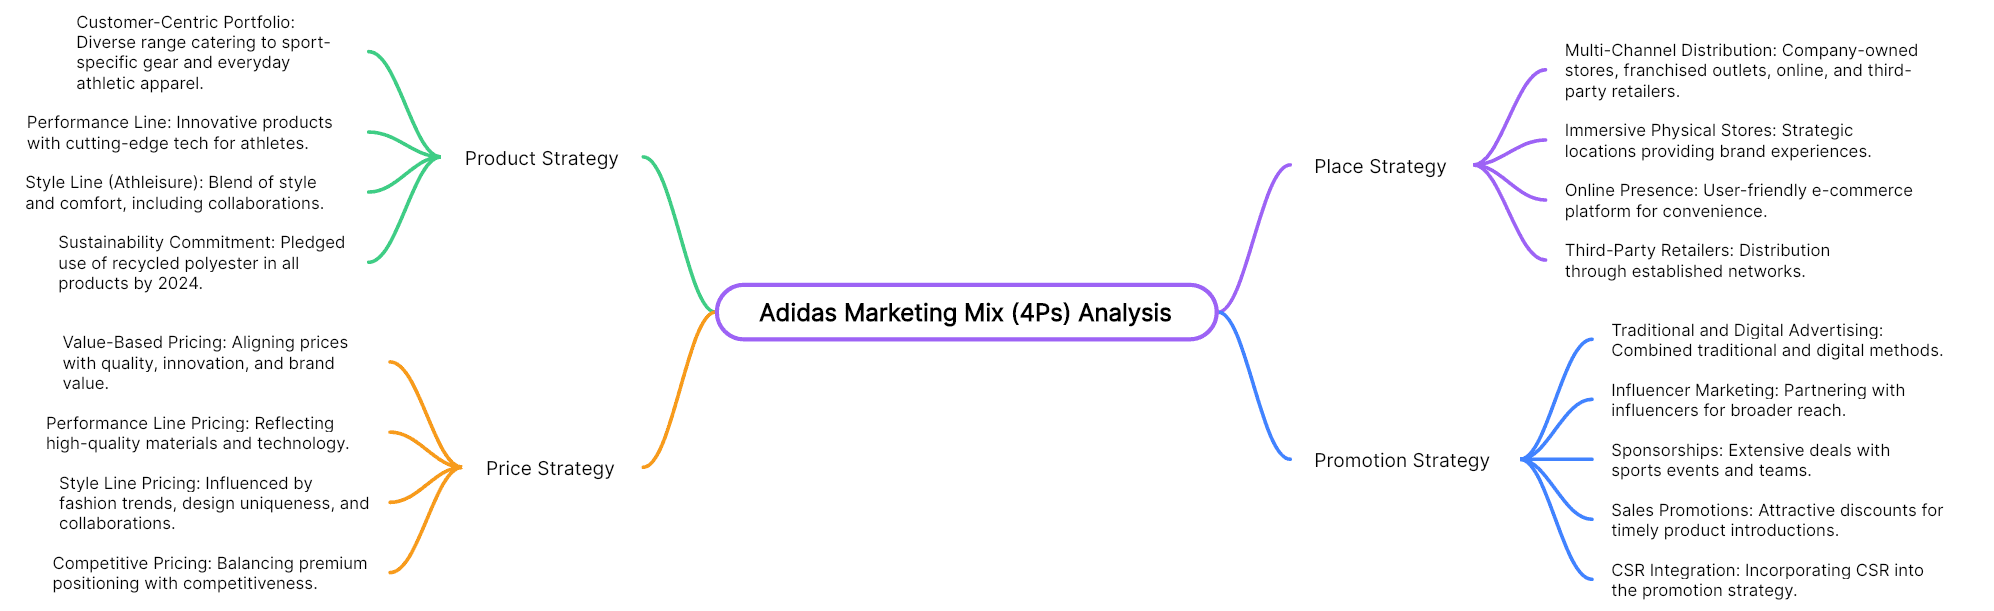 Adidas Marketing Mix (4Ps) Analysis Mind Map